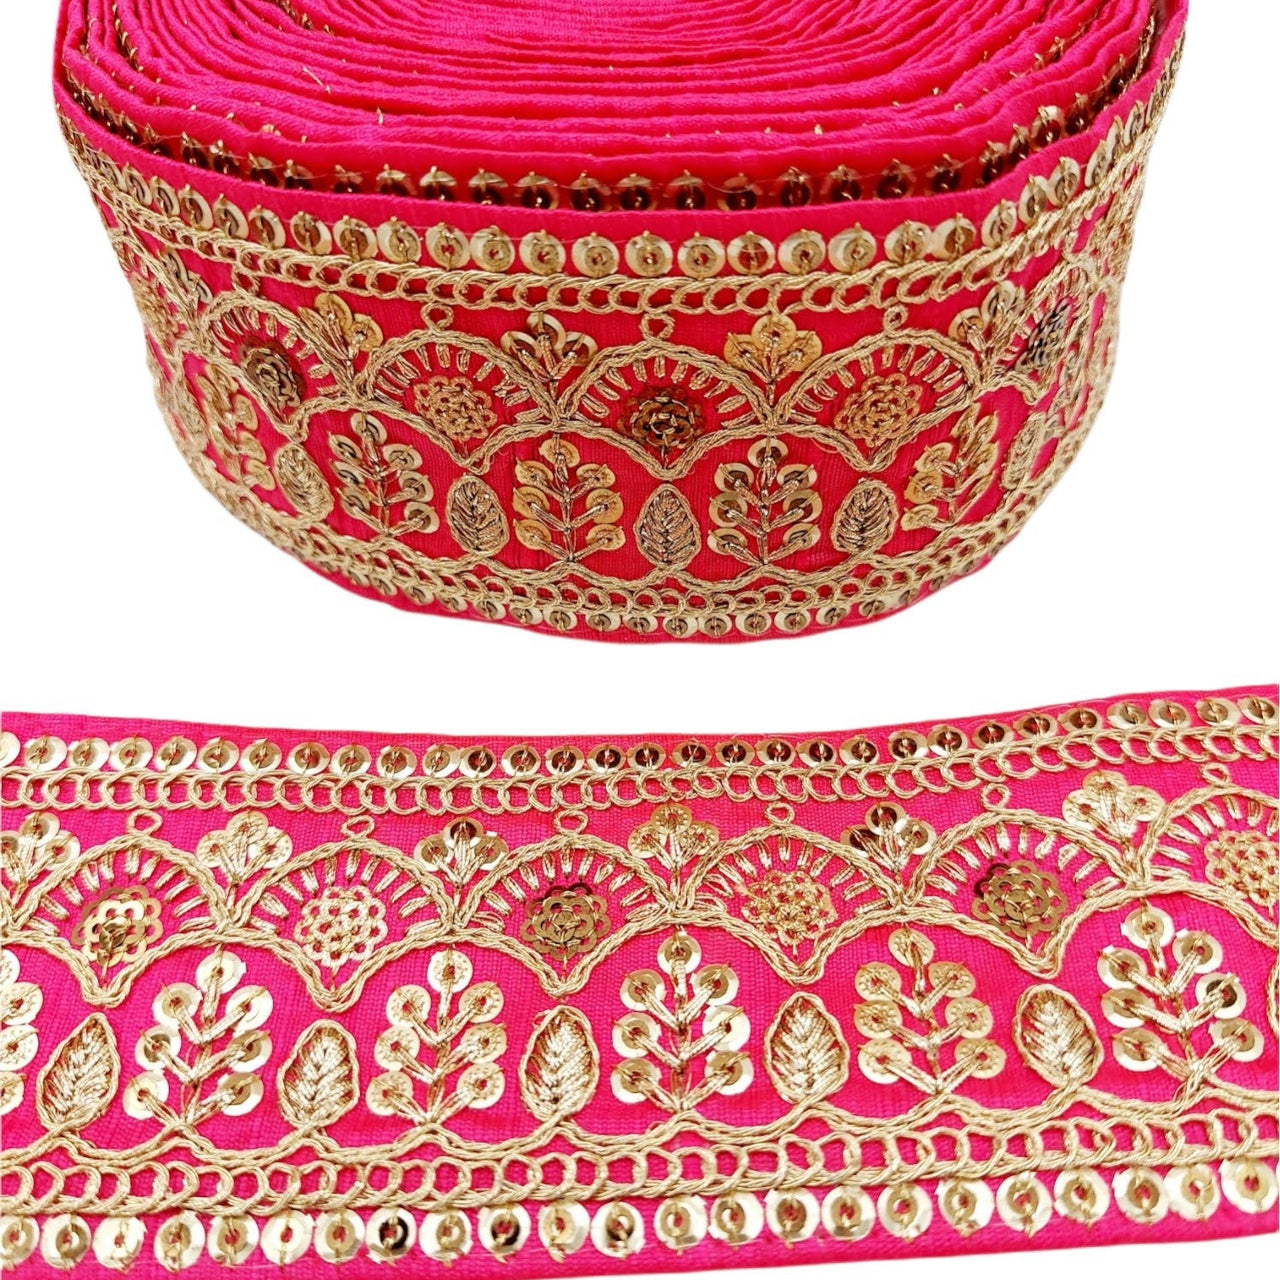 2 Yards Dark Pink Gold Embroidered Lace Trim Sequins Trim Decorative Sari Border Costume Ribbon Crafting Sewing Tape